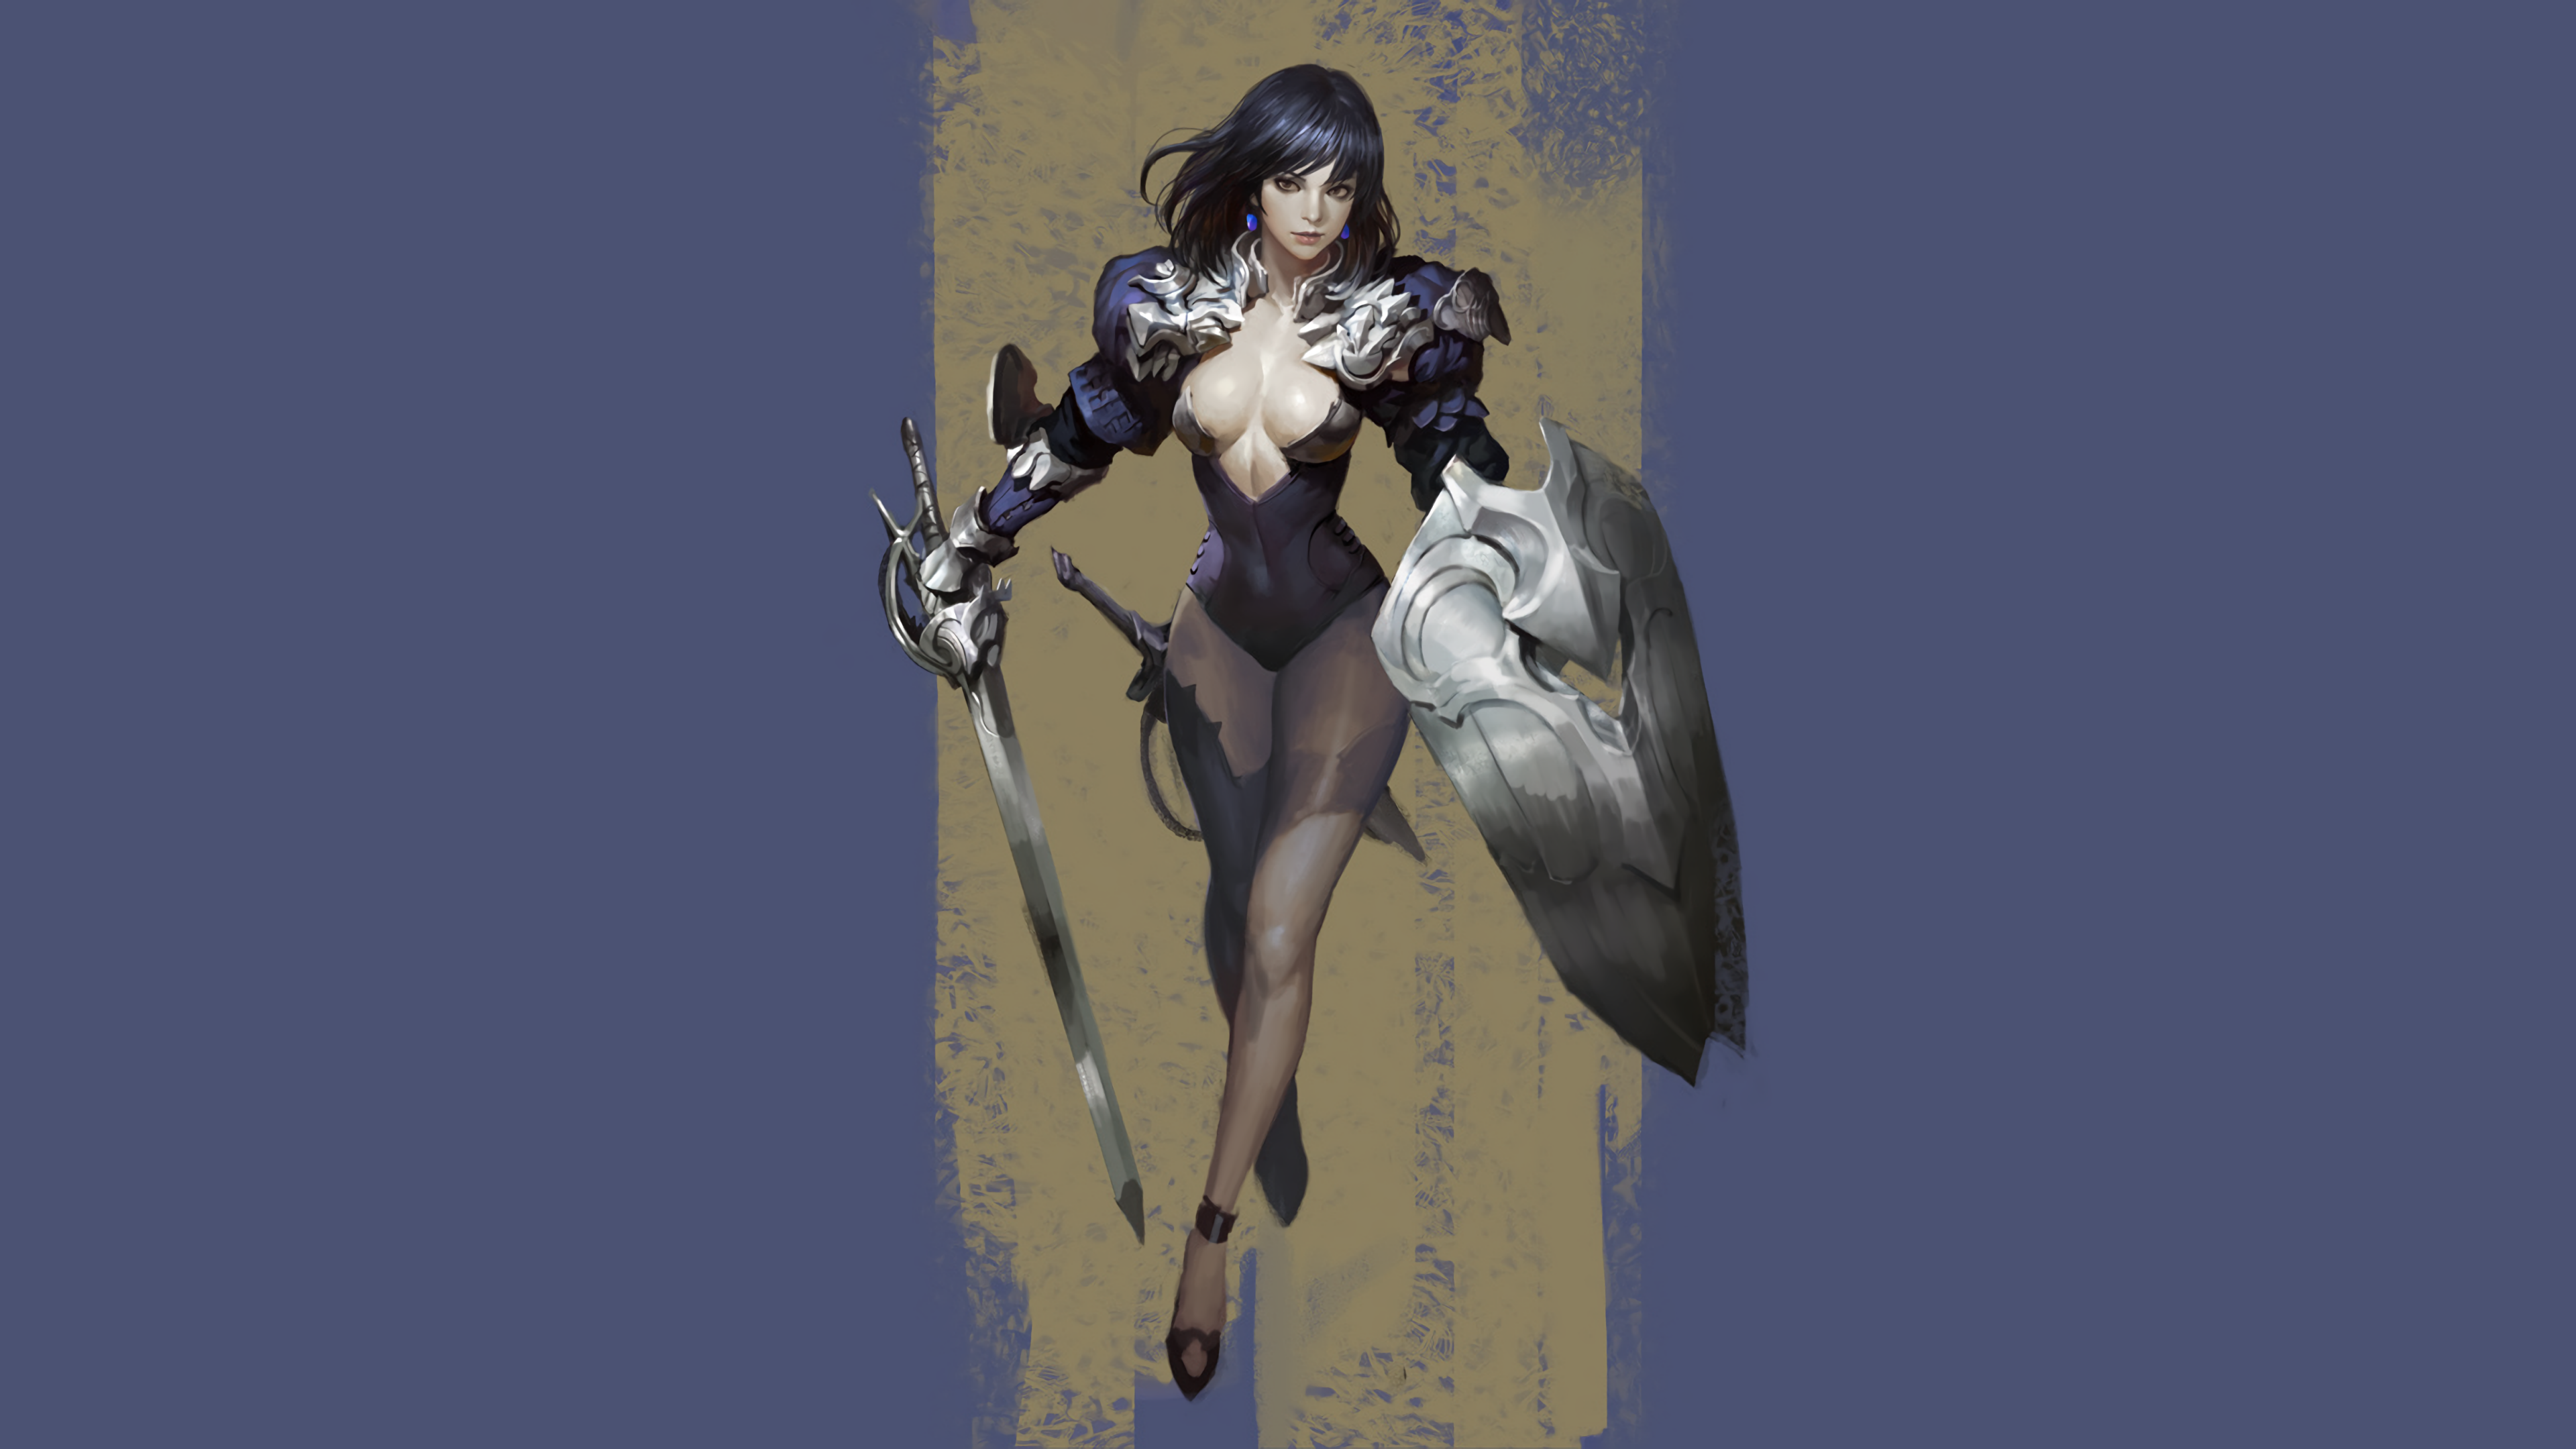 General 3840x2160 illustration shield sword black hair cleavage armor armored woman high heels pantyhose earring Heonhwa Choe